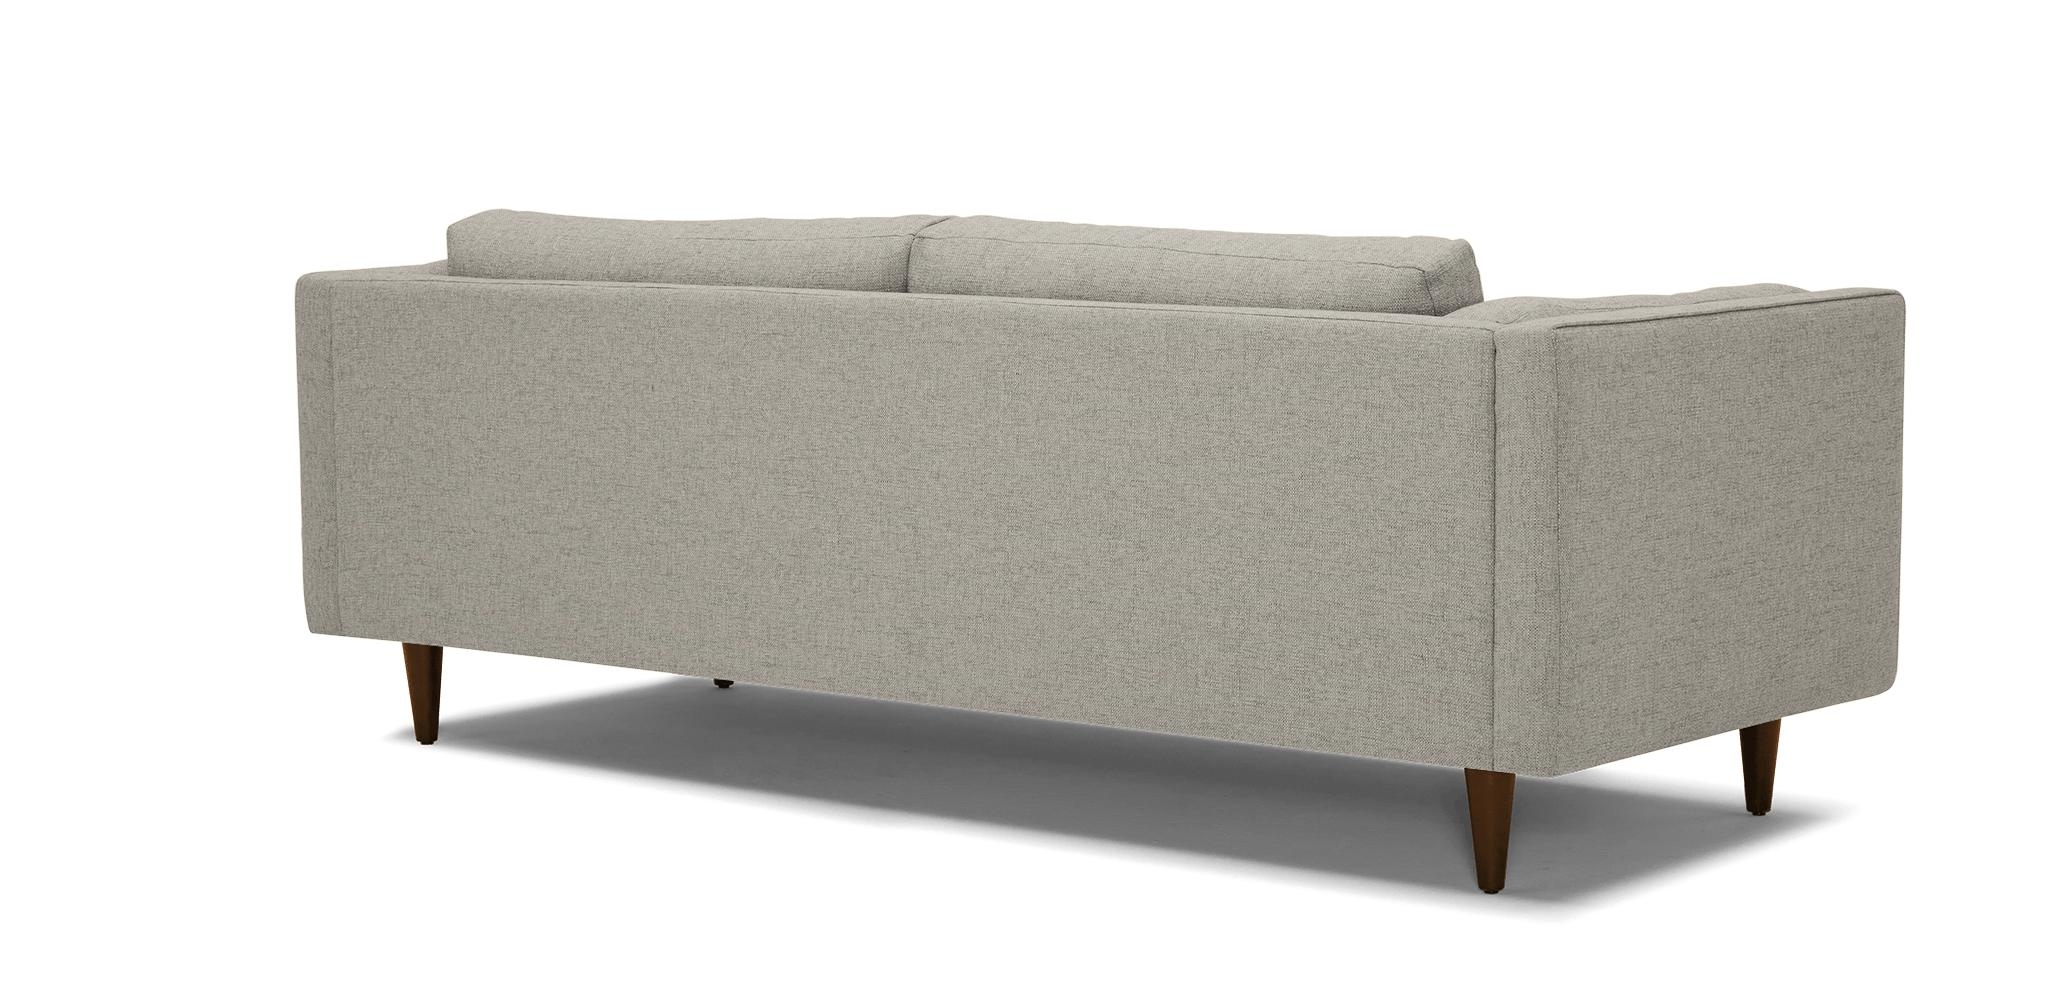 White Parker Mid Century Modern Sofa - Bloke Cotton - Mocha - Image 3